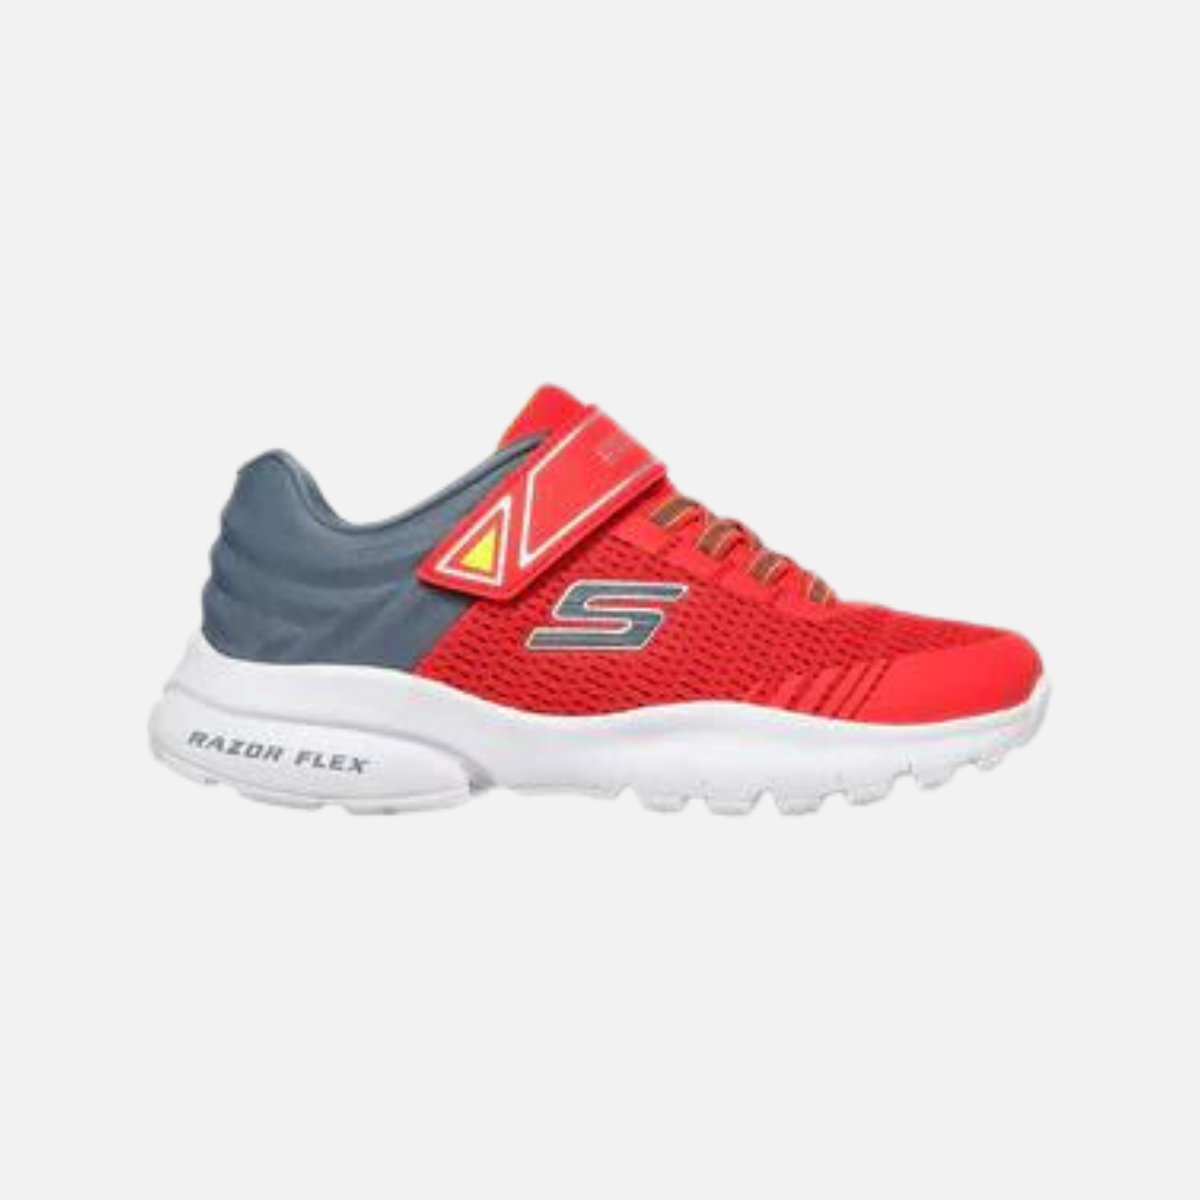 Skechers Razor Flex Kid's Shoes (4-9 Year)- Charcoal/red